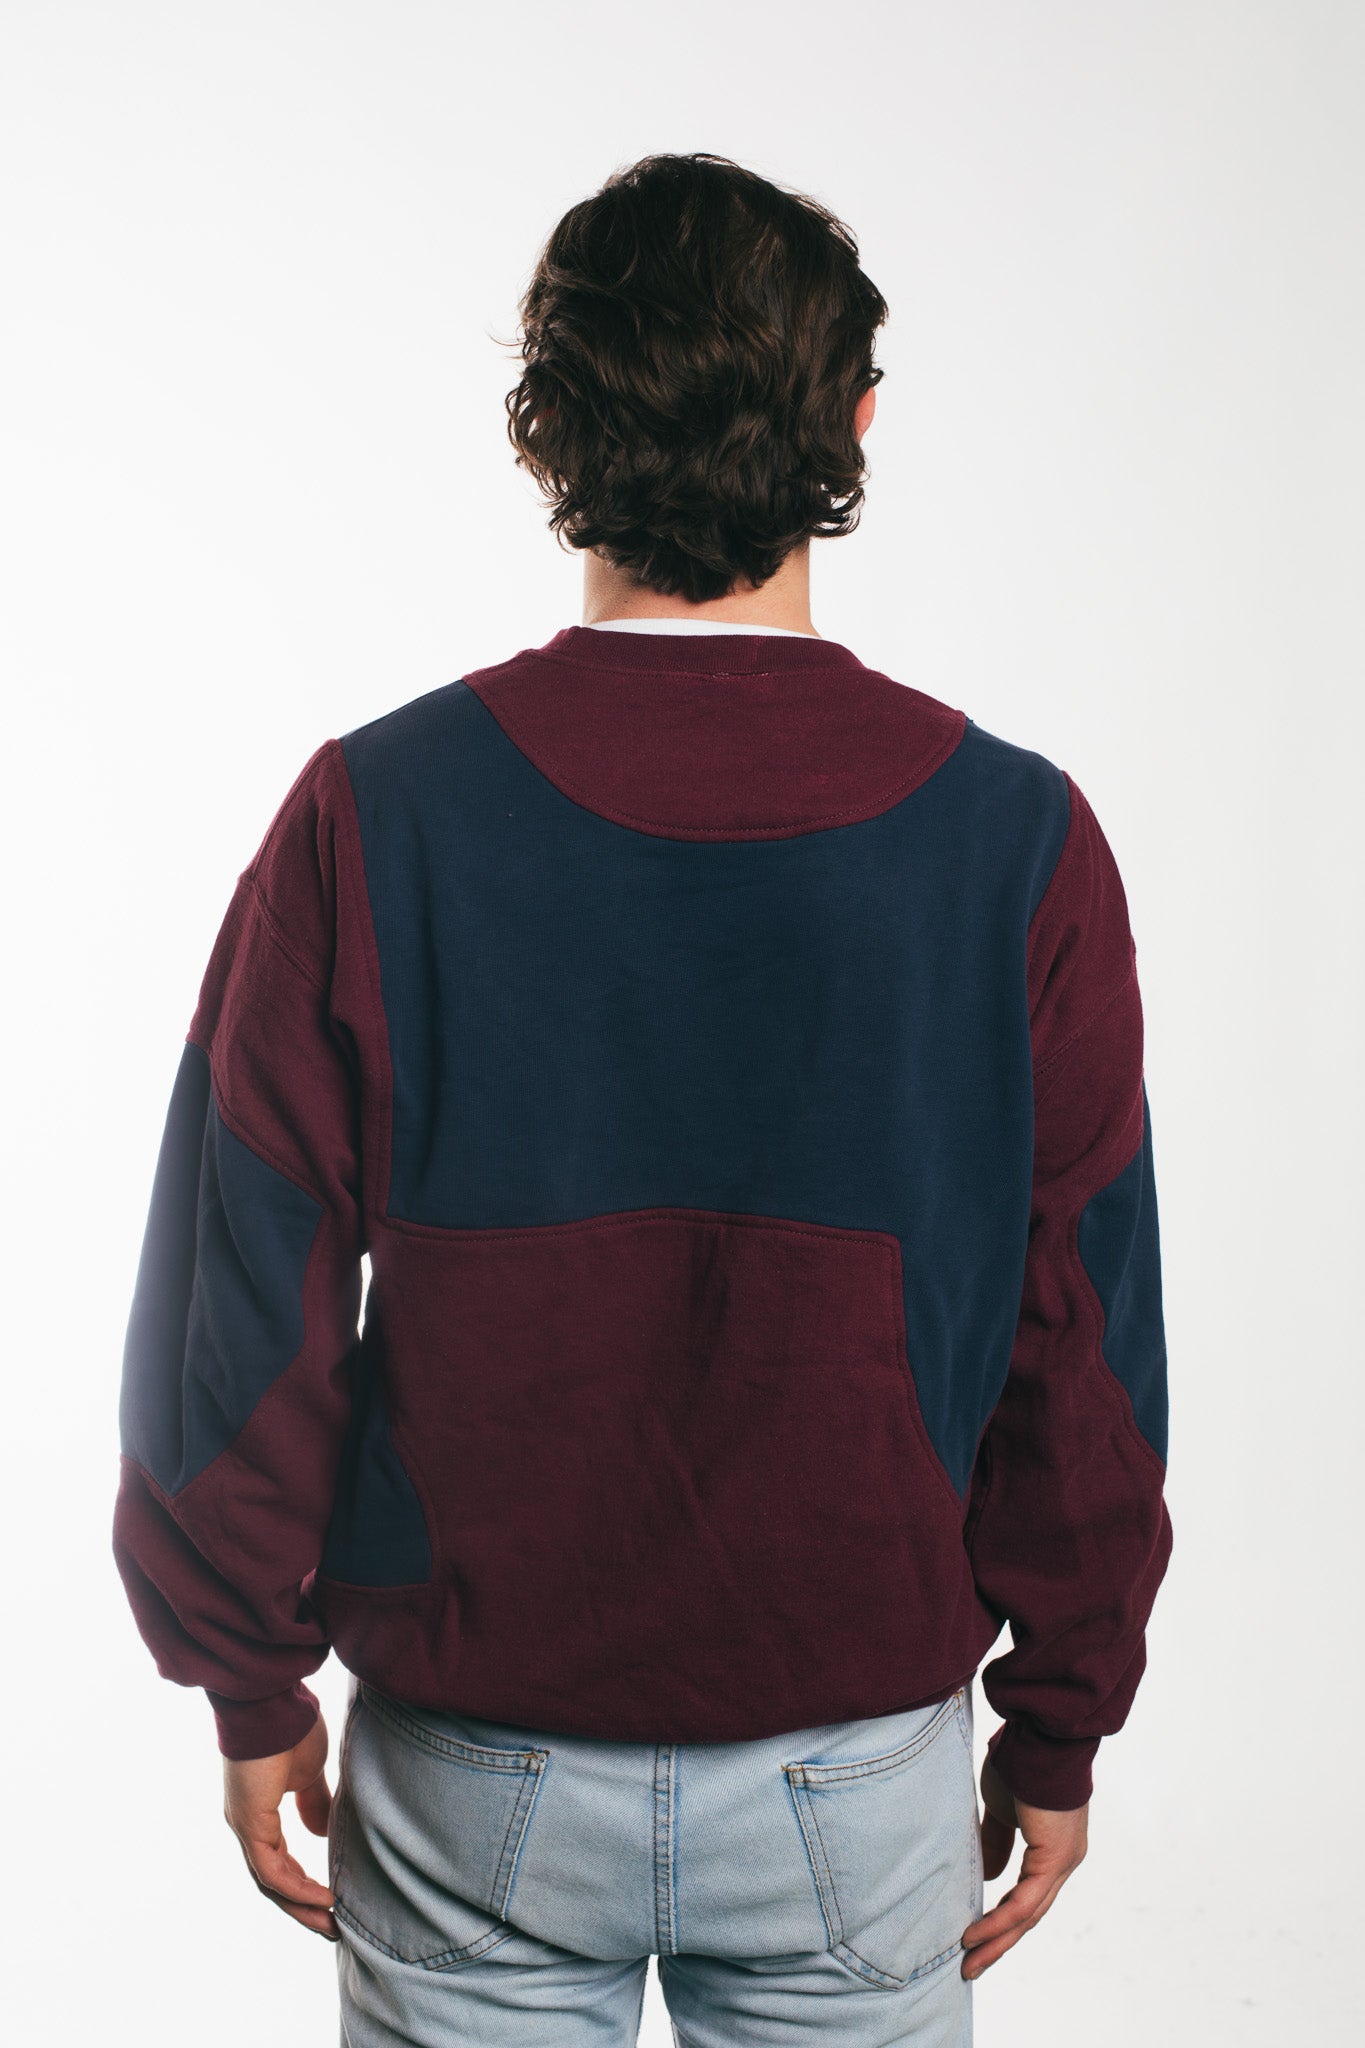 The North Face - Sweatshirt (L)